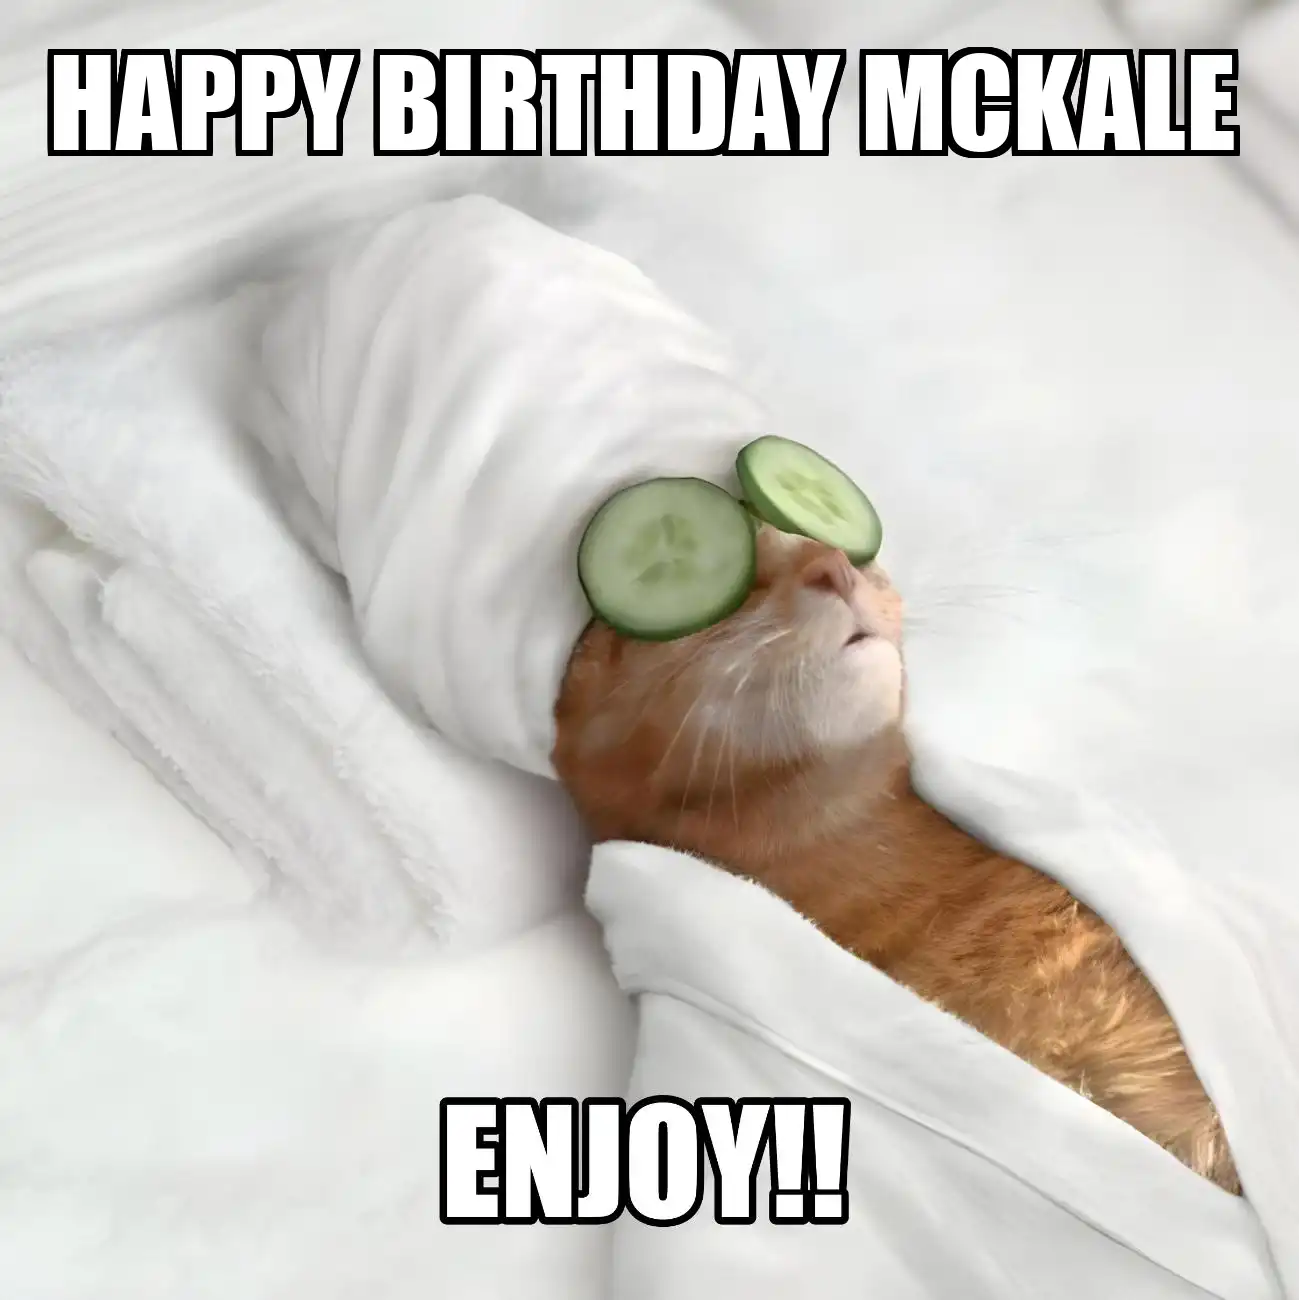 Happy Birthday Mckale Enjoy Cat Meme